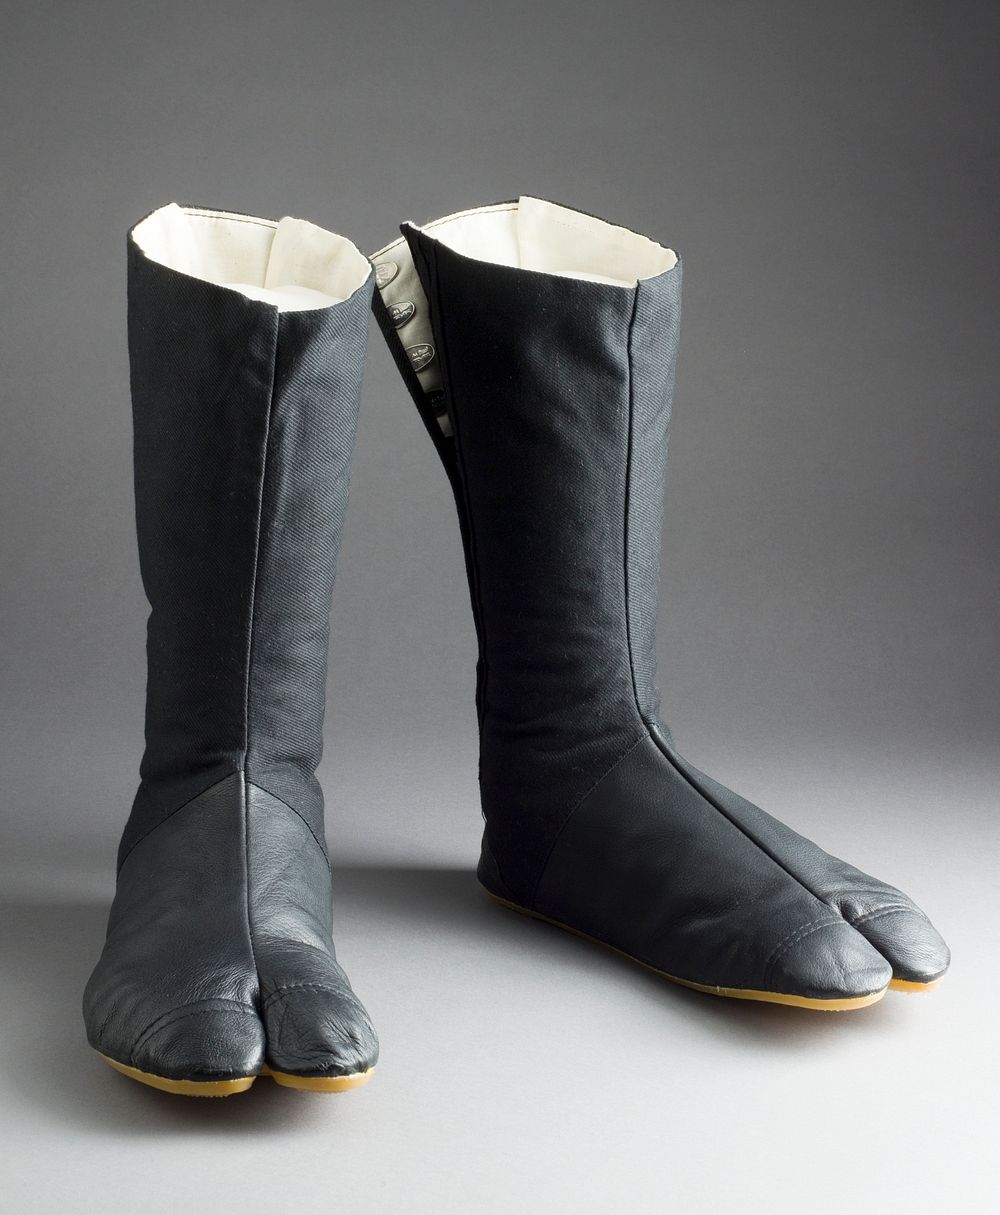 Pair of Split-Toe Boots (Jikatabi) by Martin Margiela and Maison Martin Margiela